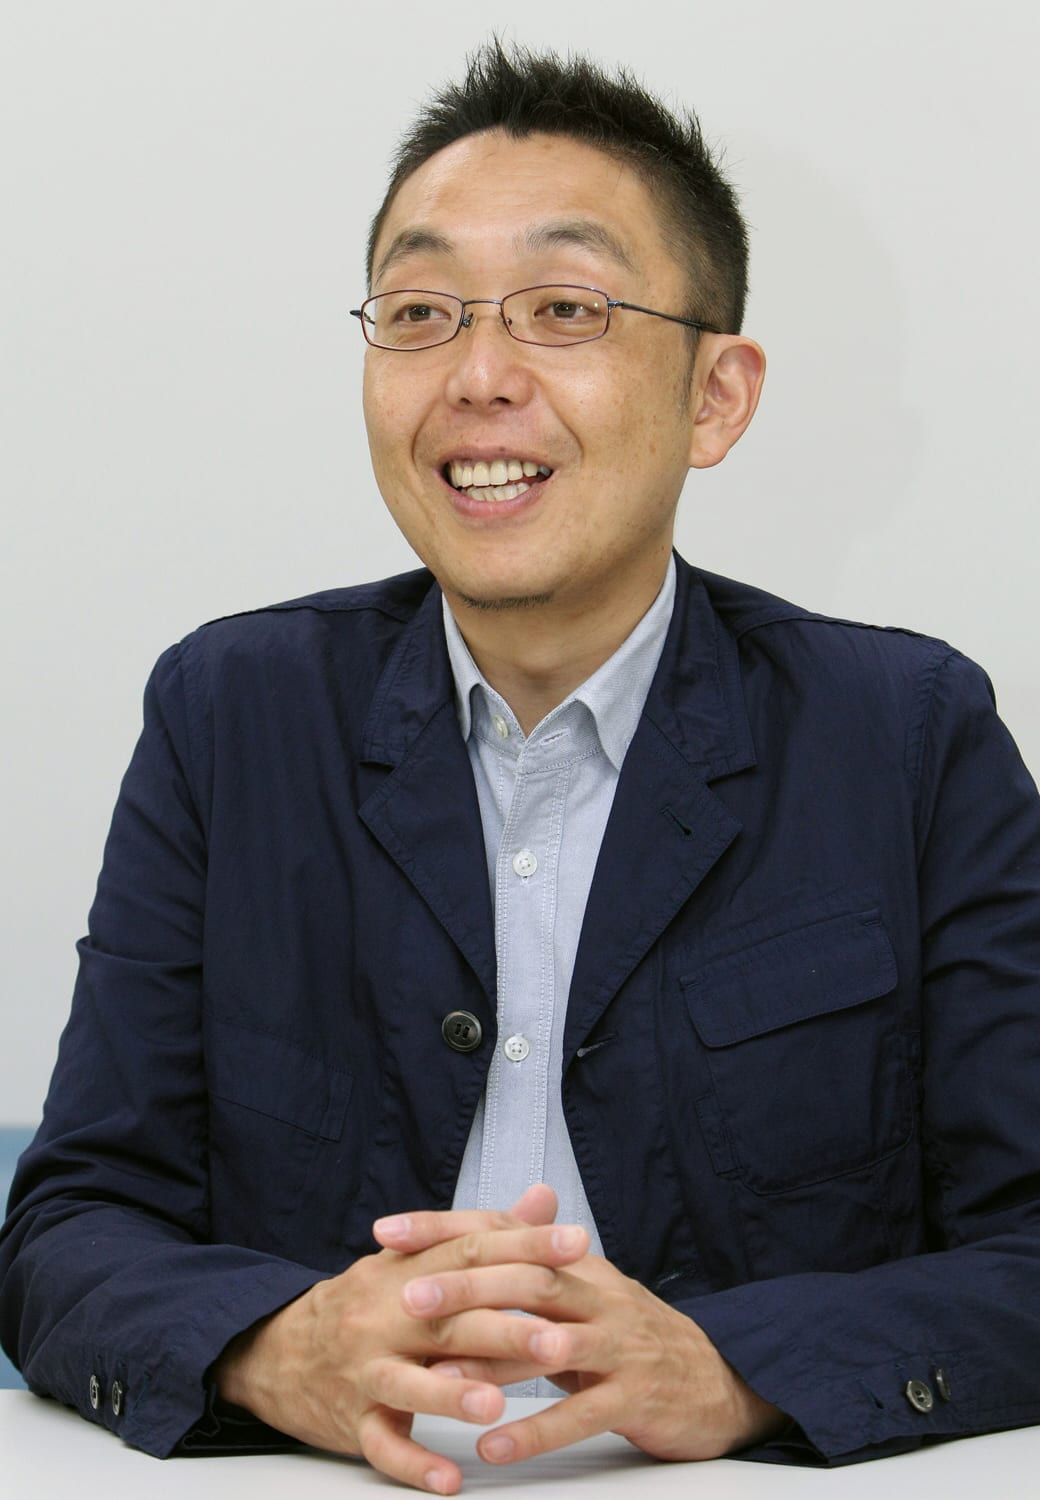 portrait of nobuyuki okumura in professional attire